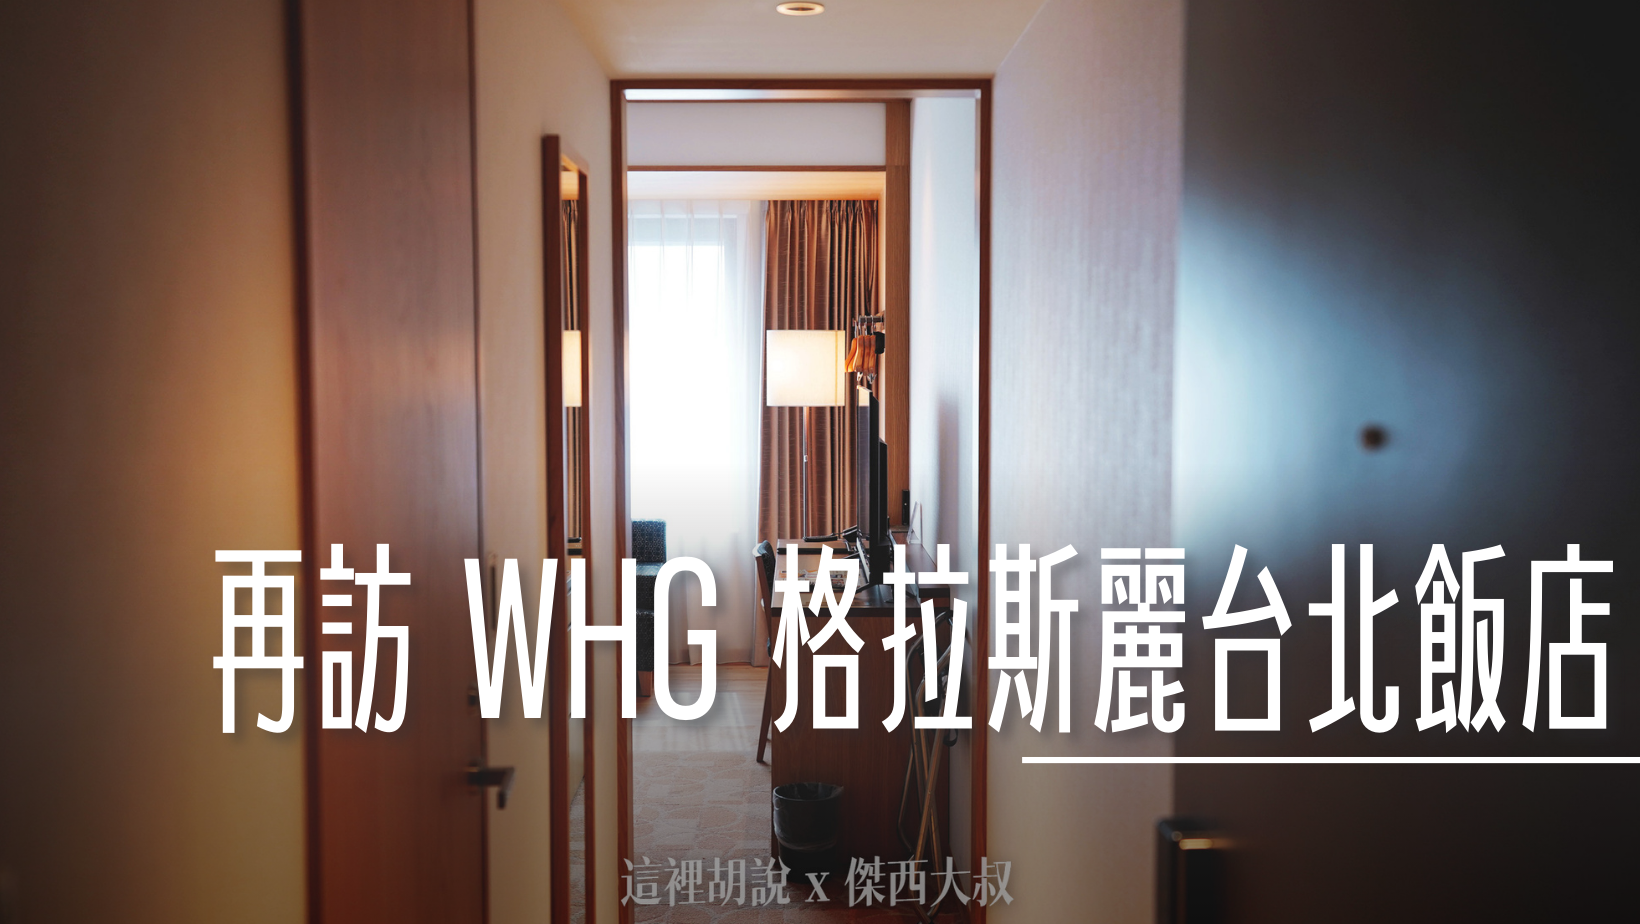 Google News,Hotel Gracery,Hotel Gracery Taipei,WHG HOTEL,格拉斯麗台北飯店 @傑西大叔 x 這裡胡說